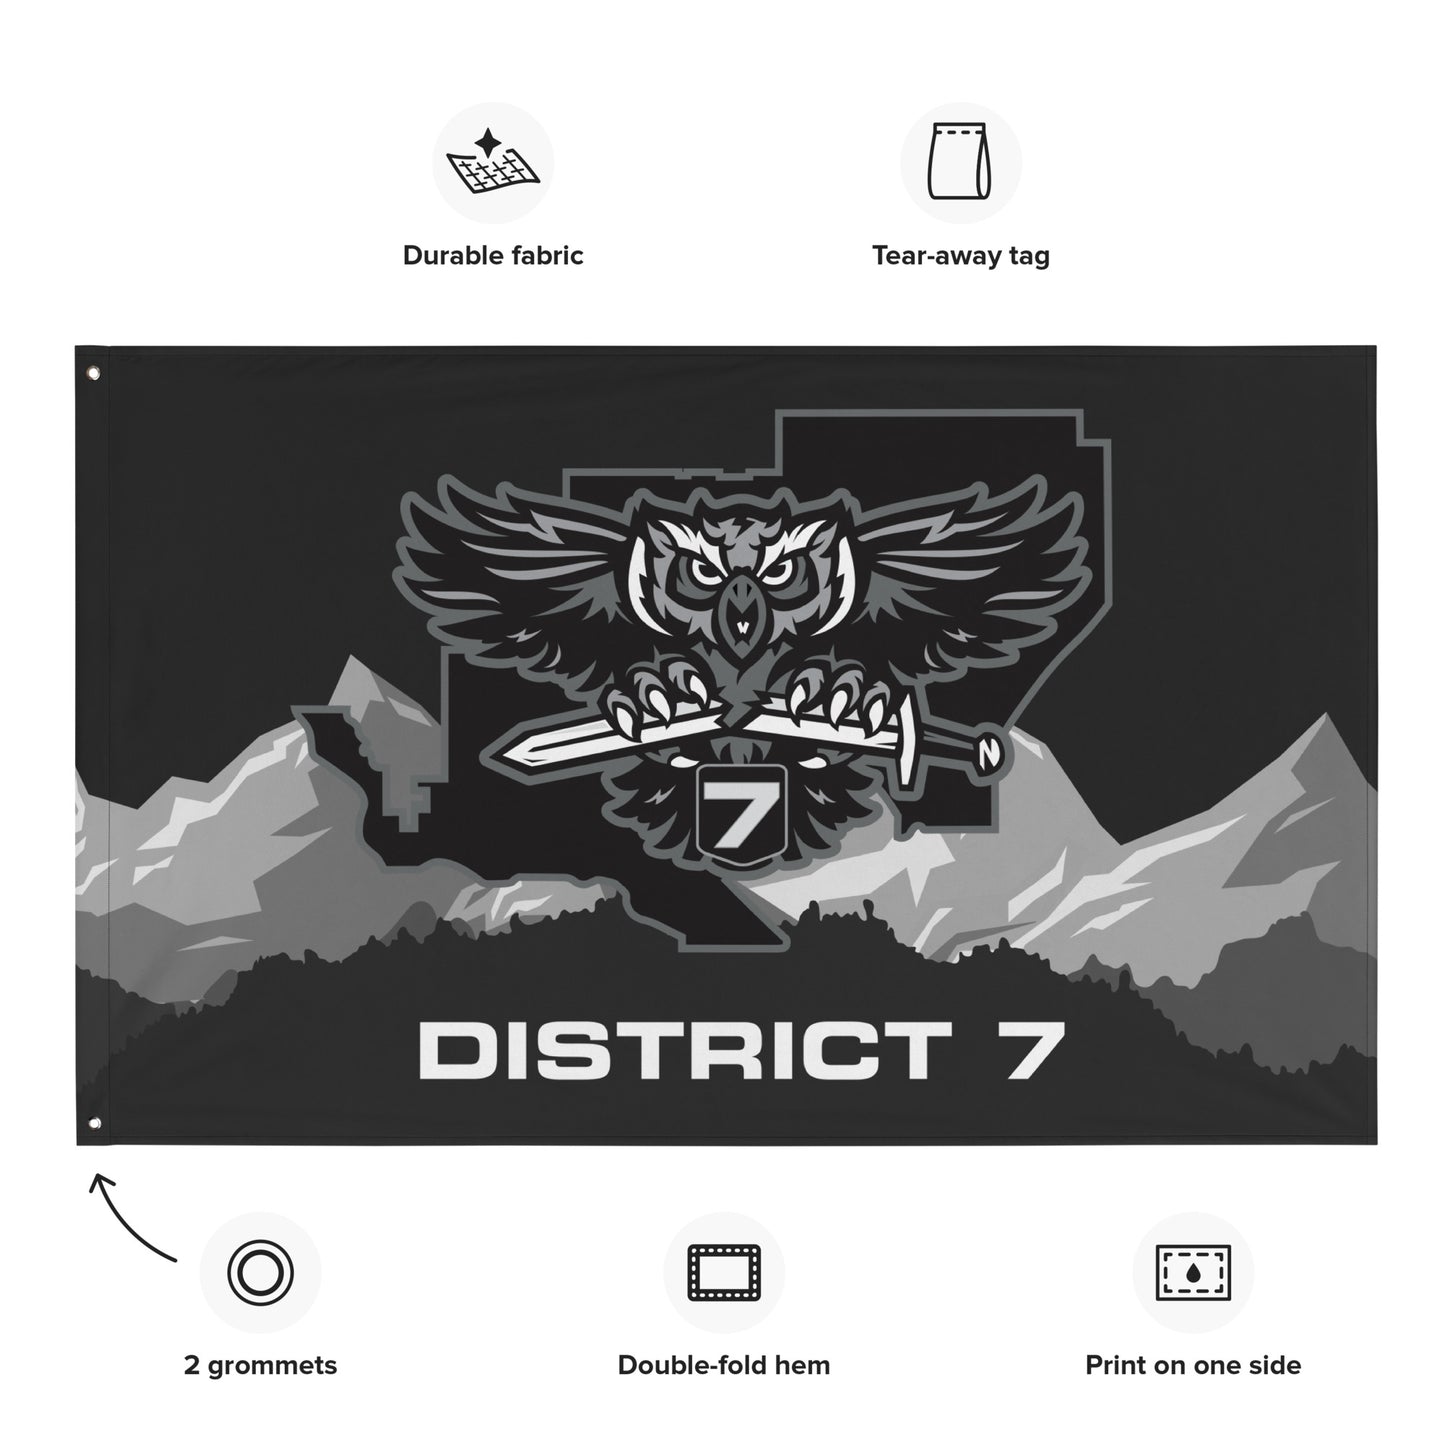 District 7 Flag